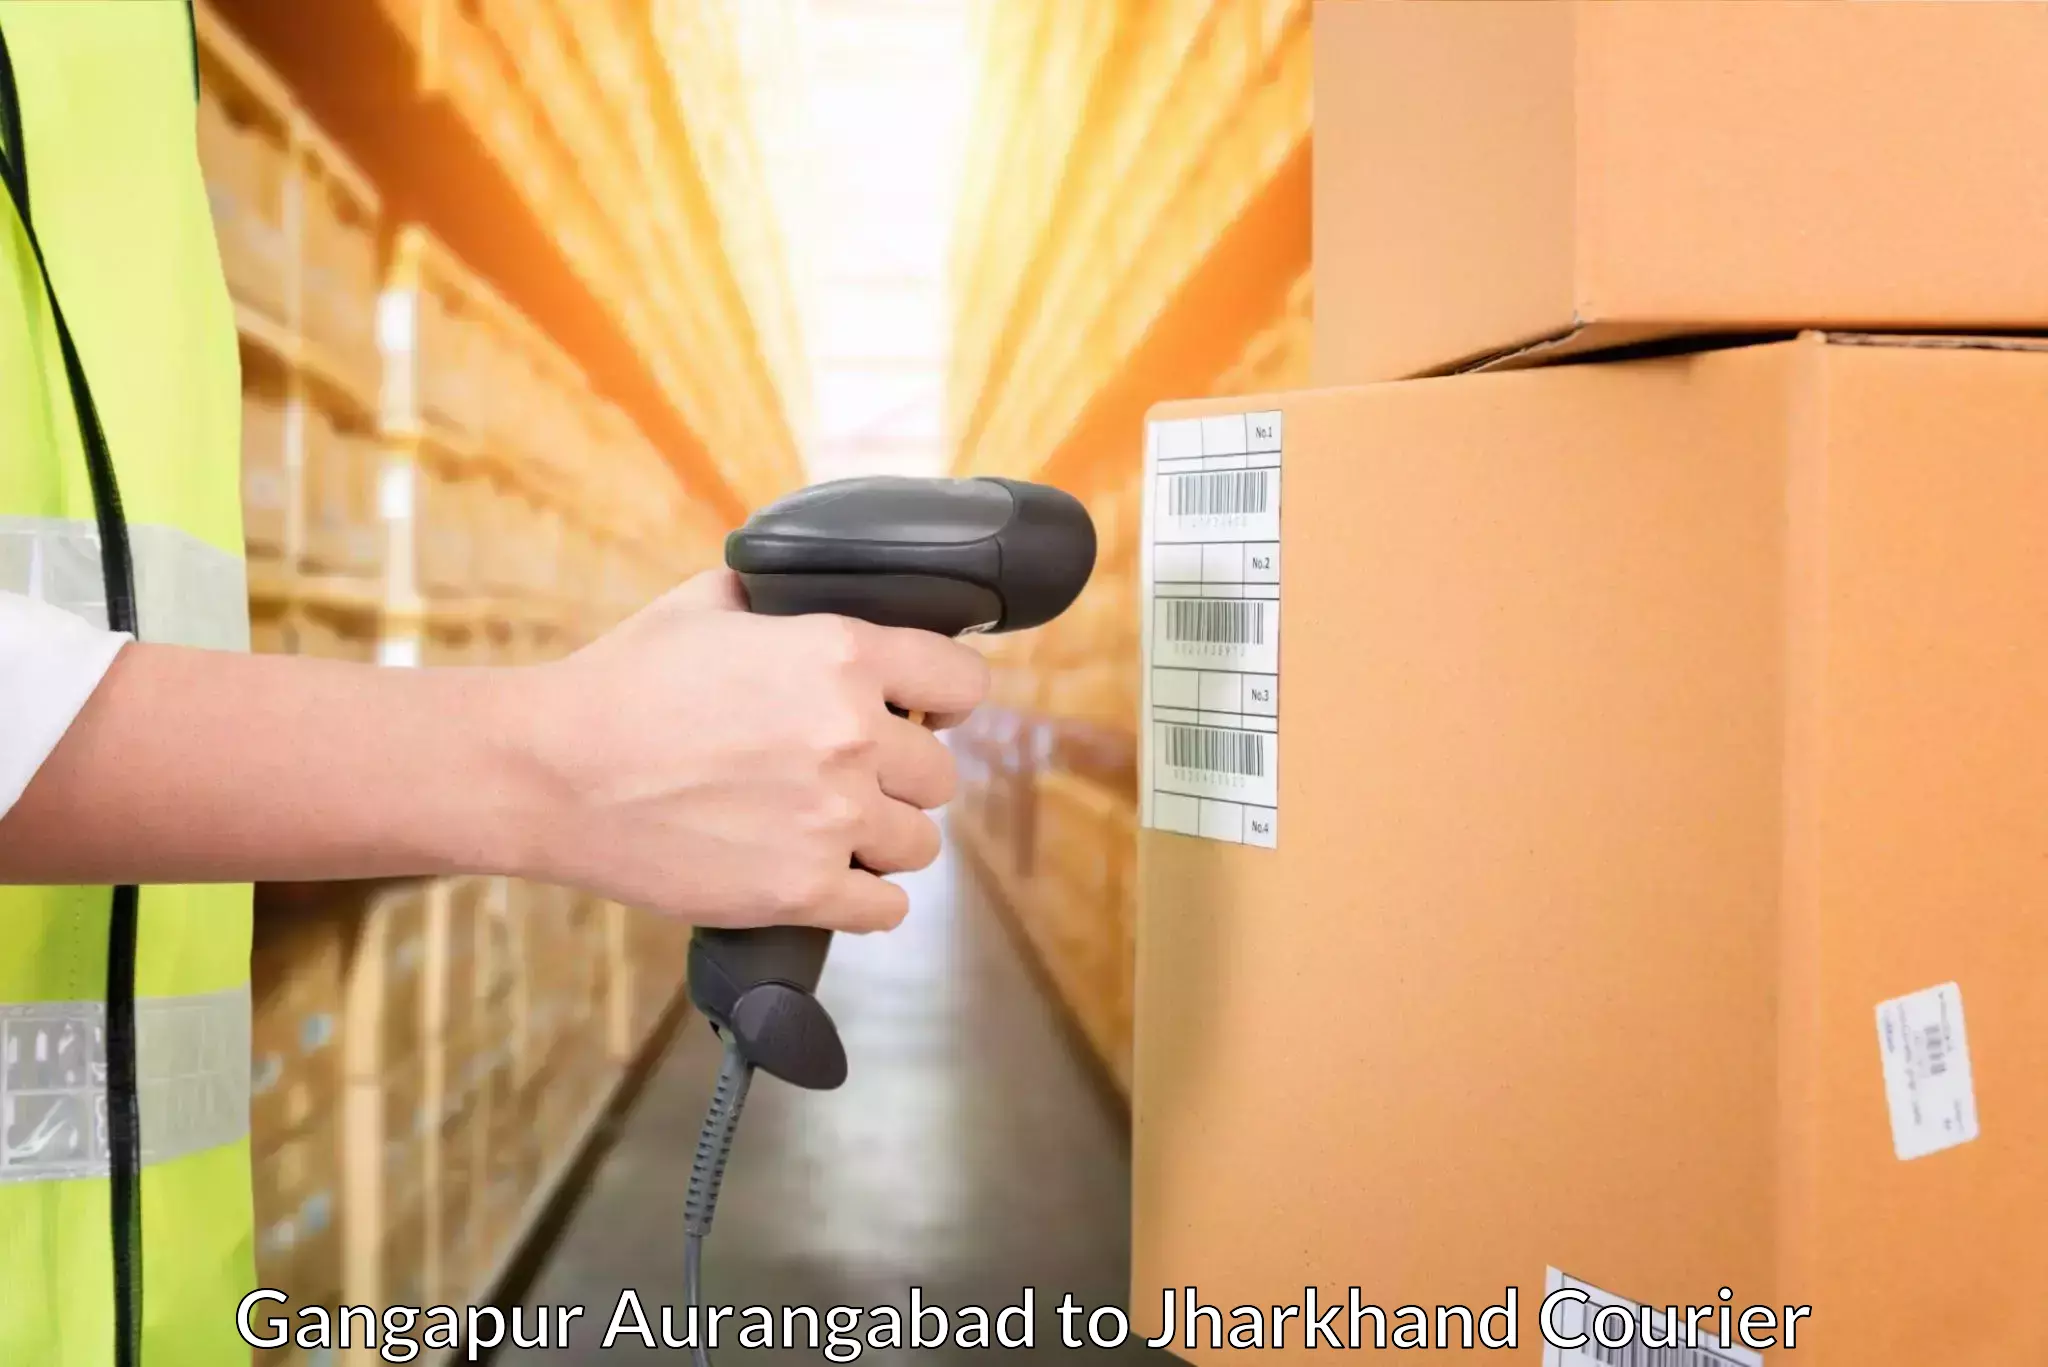 Tech-enabled shipping Gangapur Aurangabad to Ranchi